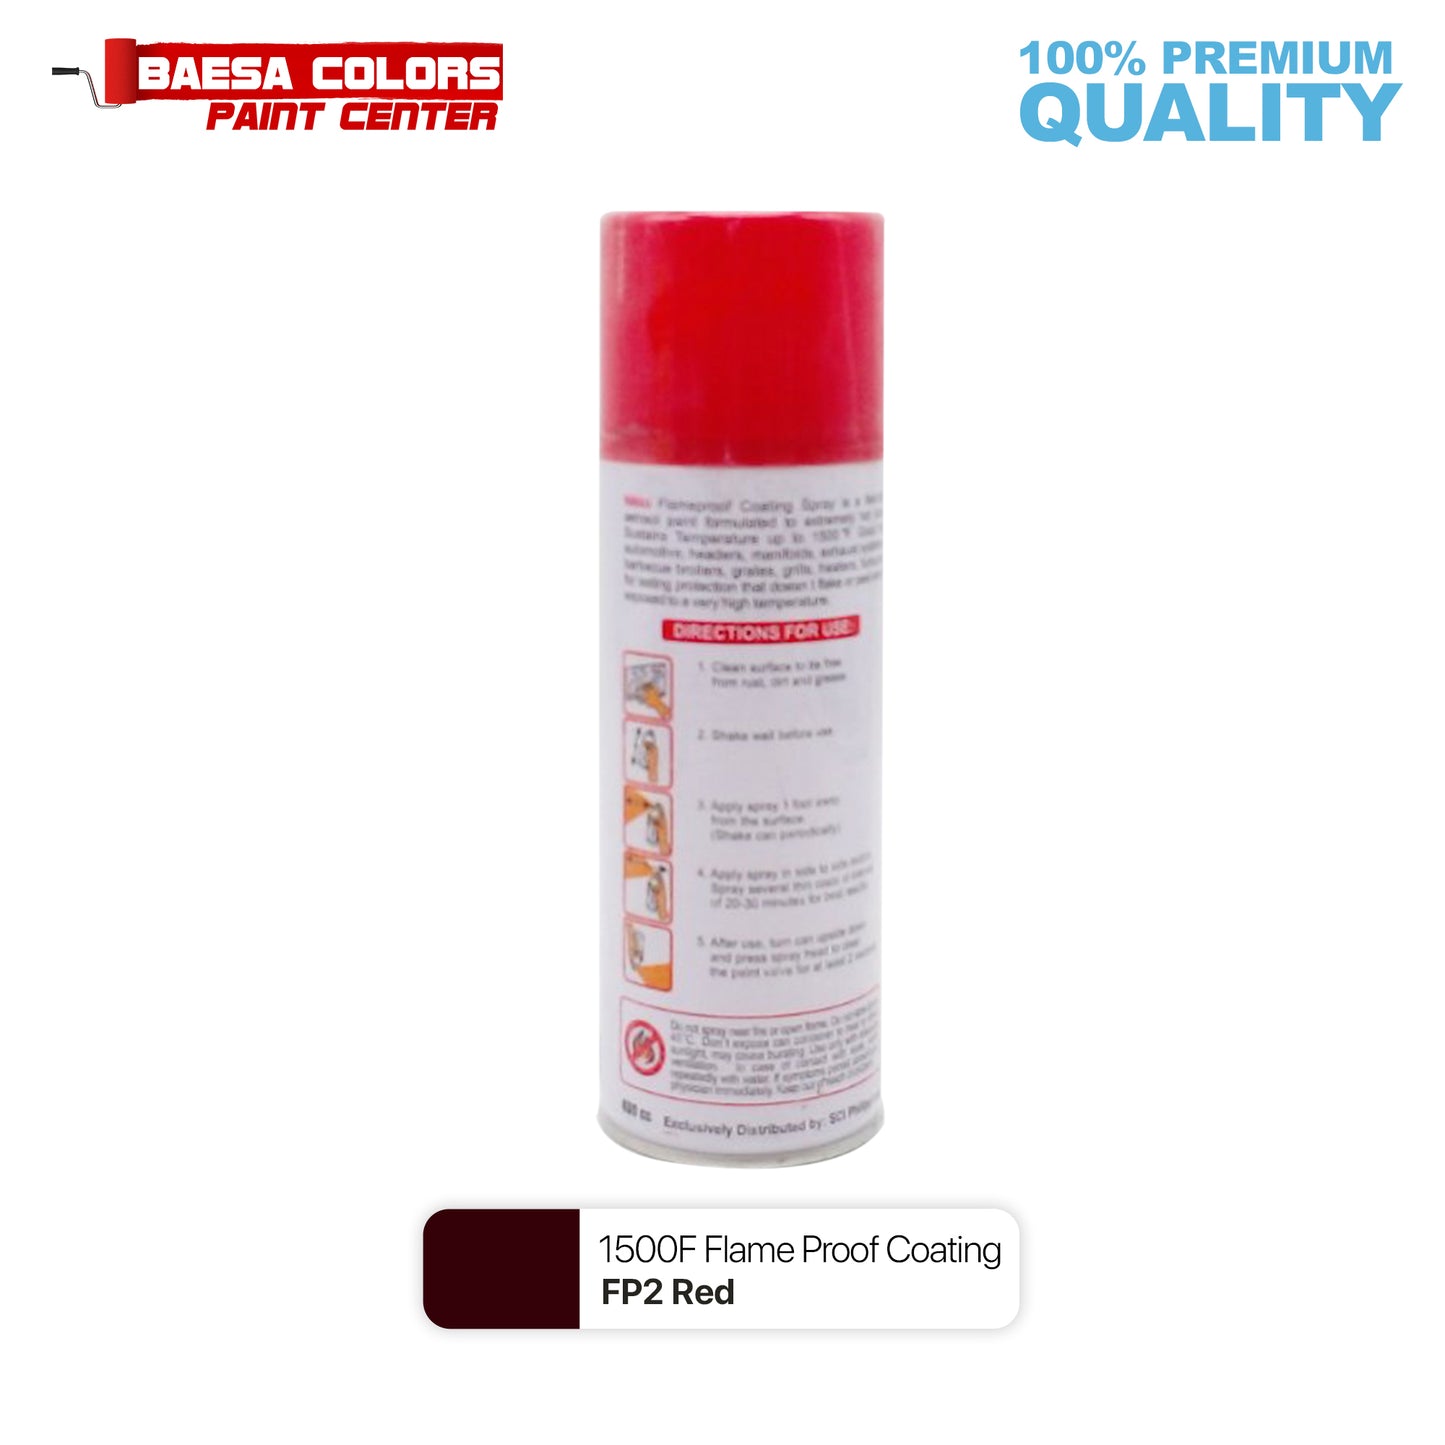 Nikko Acrylic-Based Spray Paint Flameproof FP2 Red 400cc